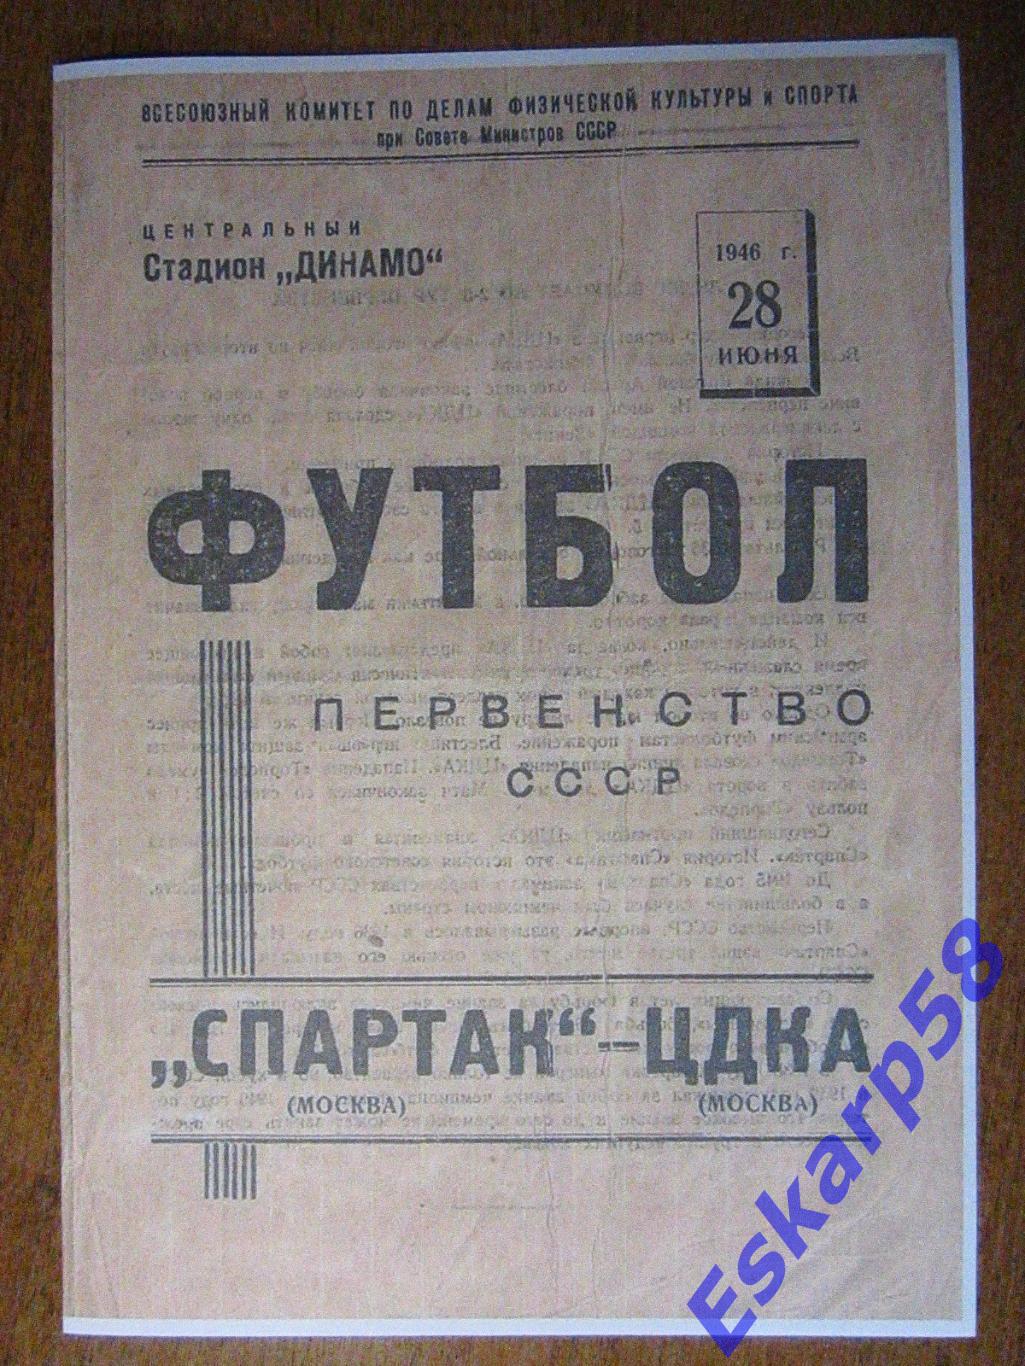 1946.Спартак Москва-ЦДКА(28.06)